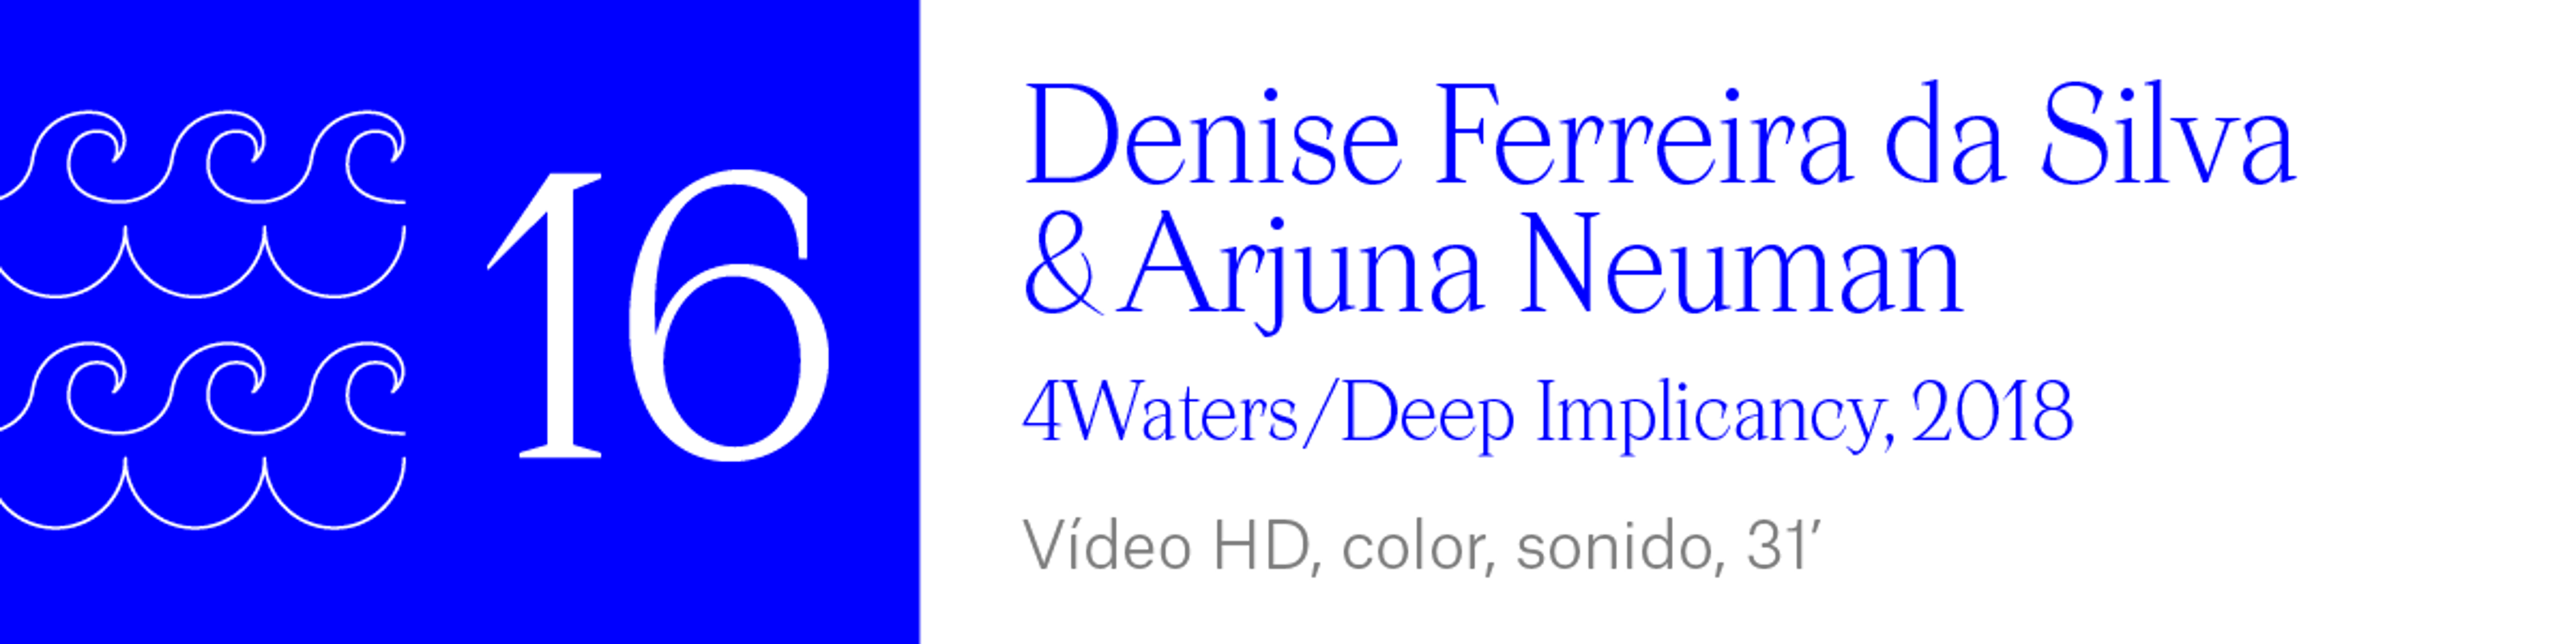 The Wave (16) Denise Ferreira da Silva & Arjuna Neuman - 4Waters/Deep Implicancy, 2018 Vídeo HD, color, sonido, 31